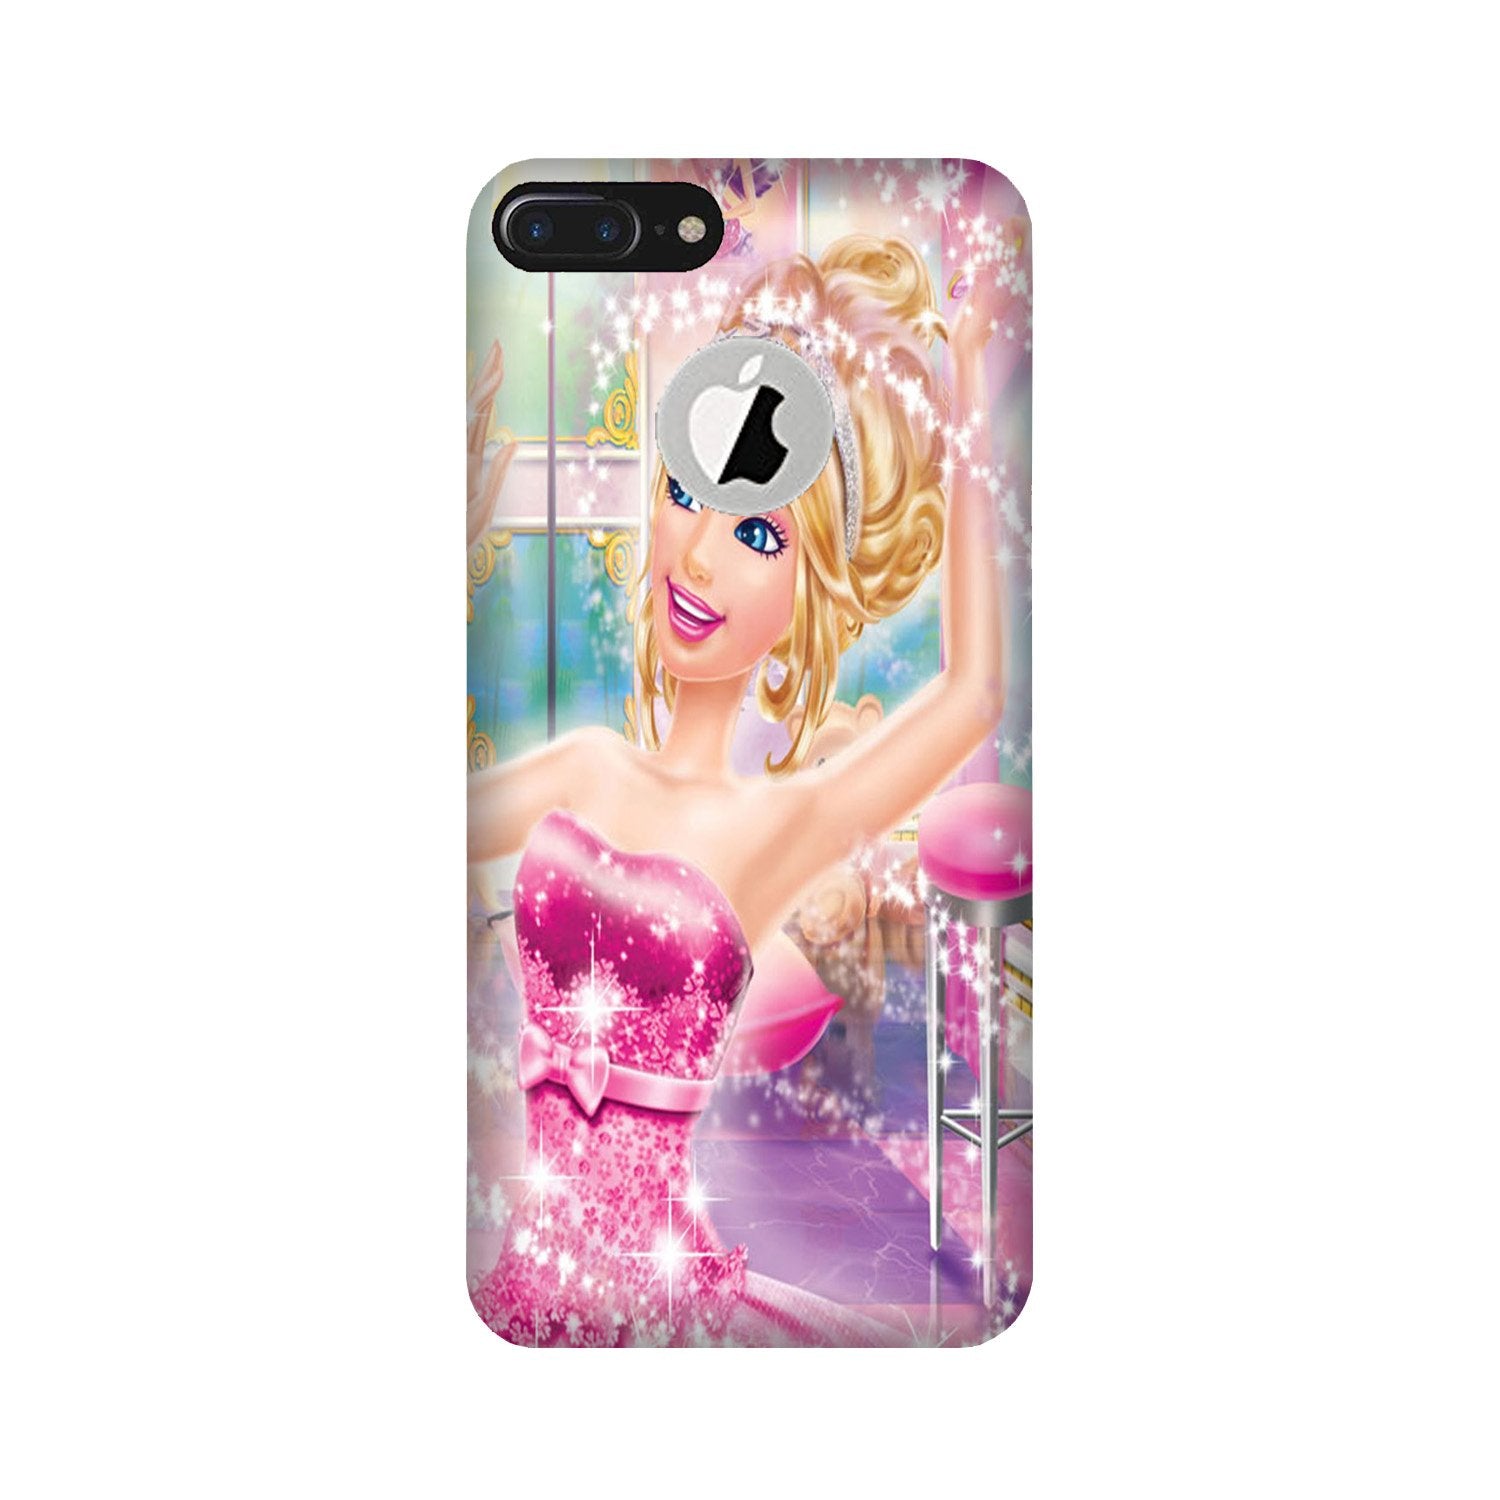 Princesses Case for iPhone 7 Plus logo cut